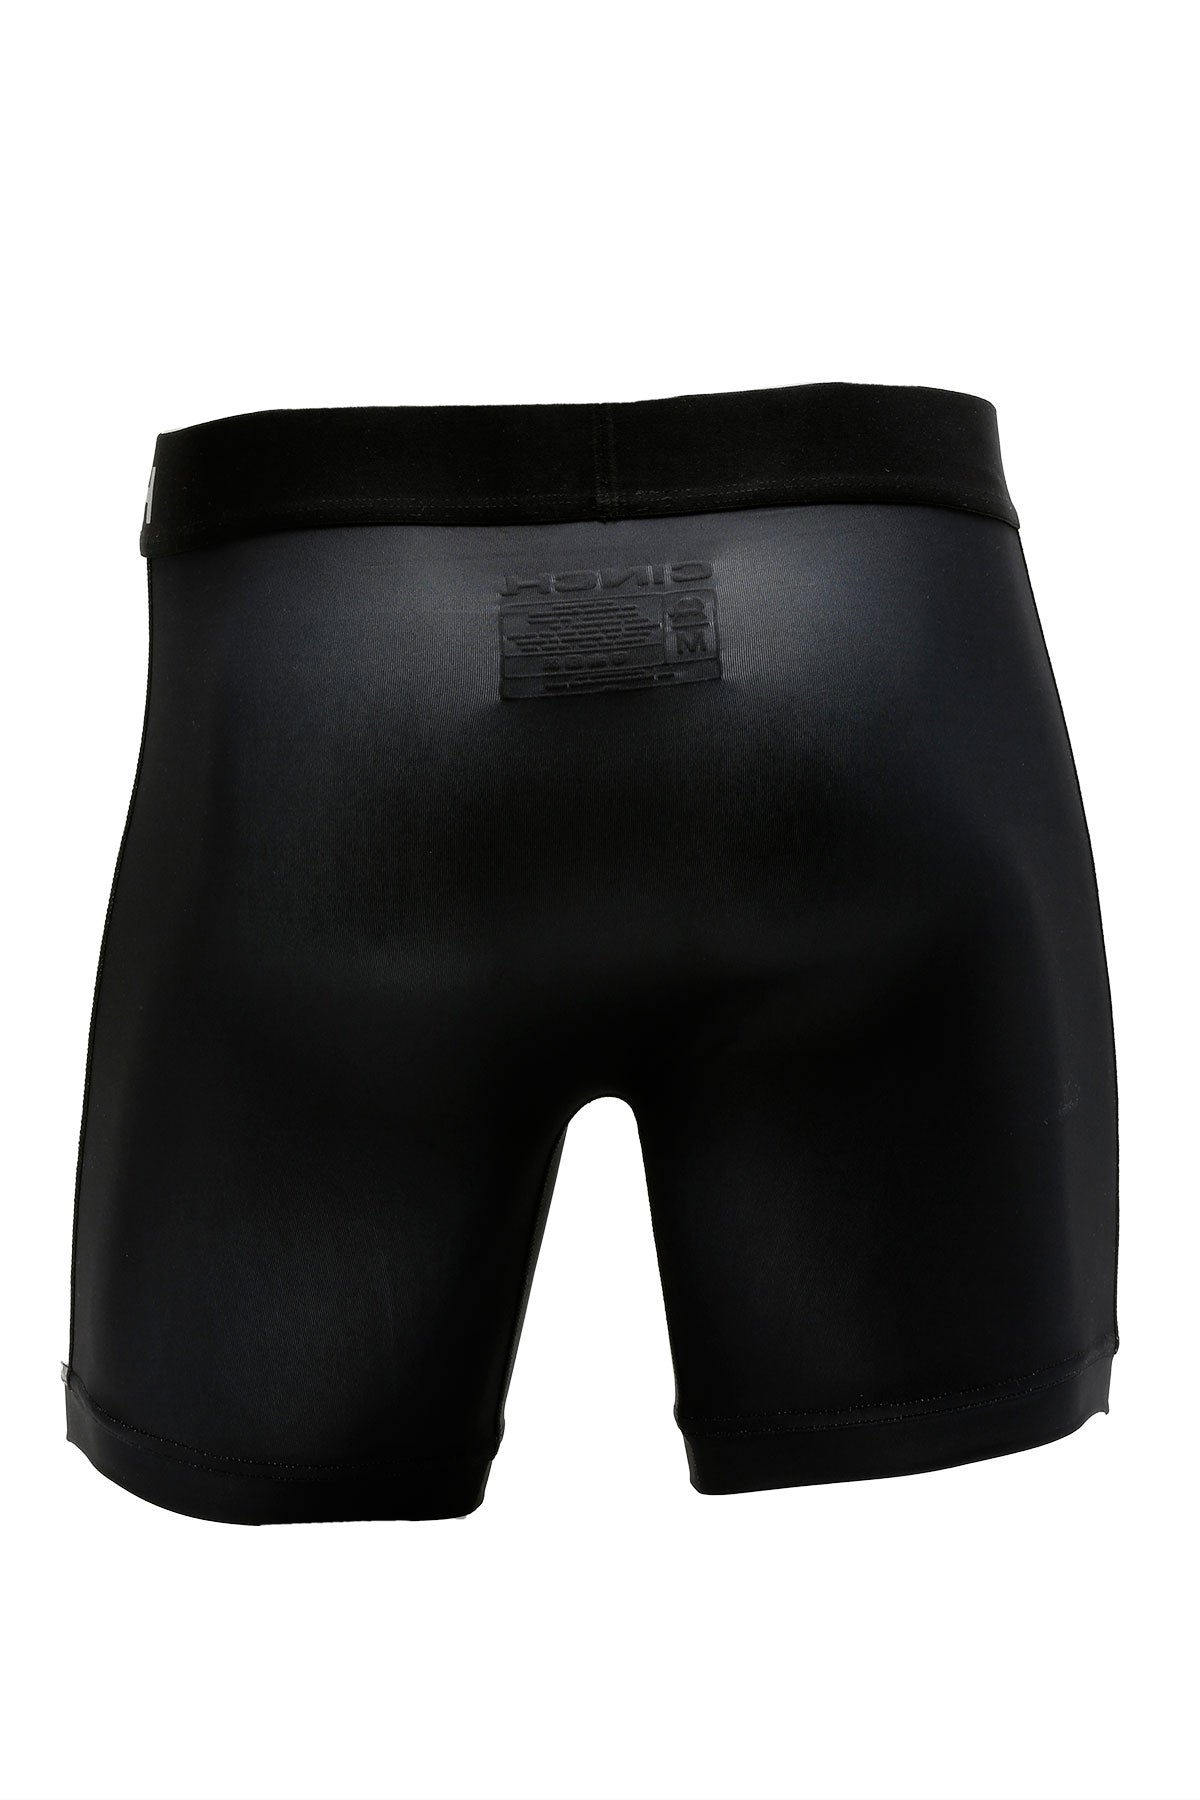 Cinch Walrus 6” Underwear (9012)